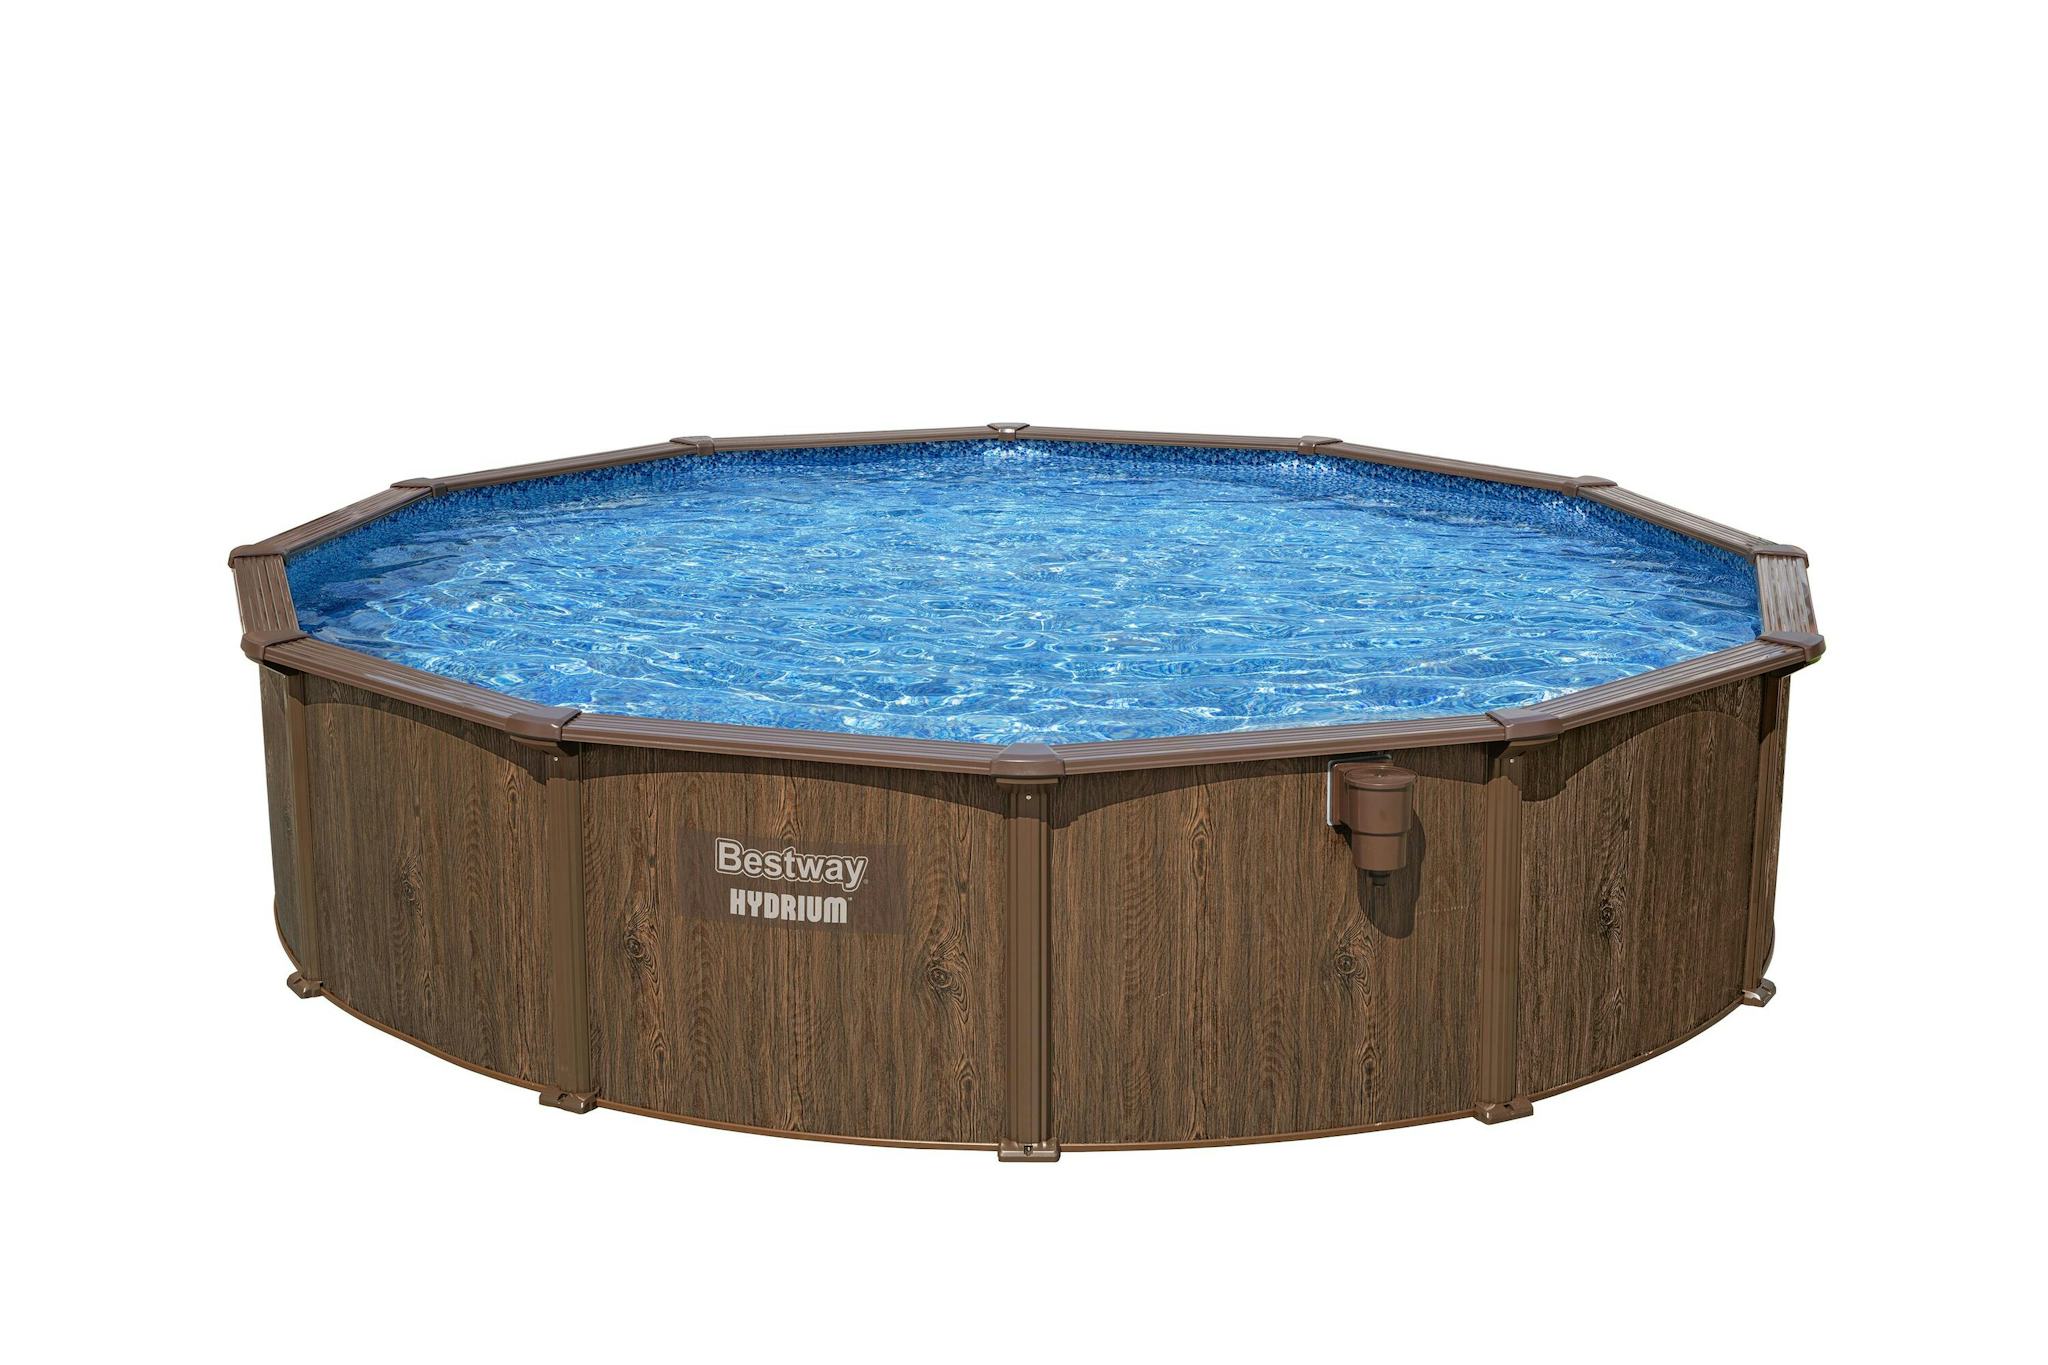 Piscine fuori terra Set piscina fuori terra rotonda Hydrium da 550x130 cm effetto legno Bestway 2